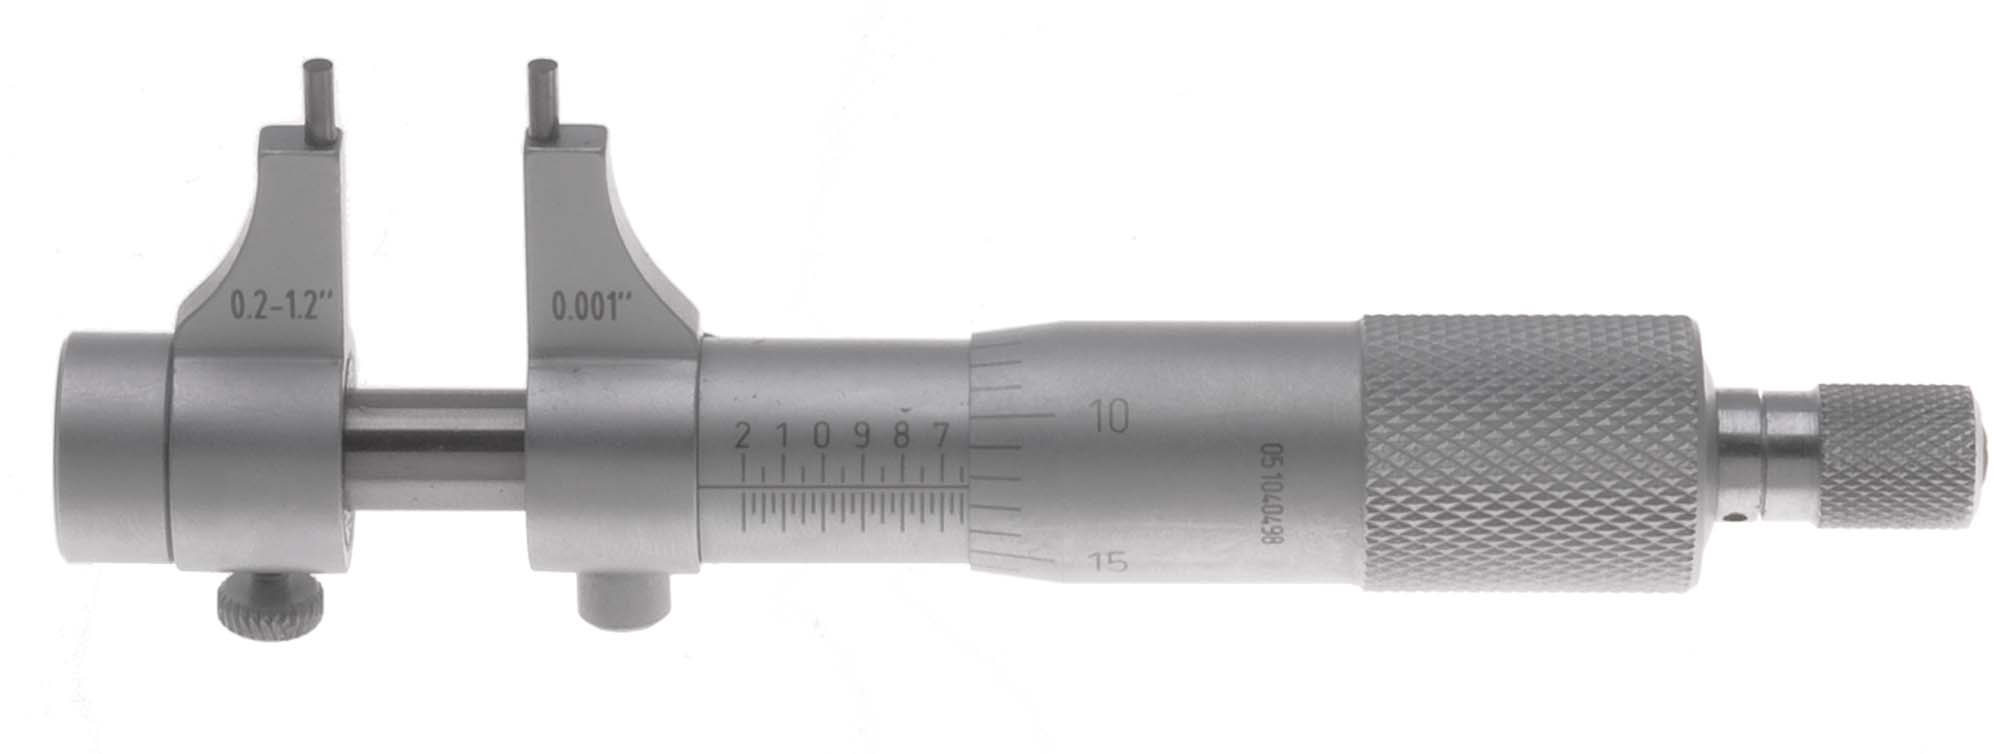 0.2"- 1.2" VME Inside Micrometer